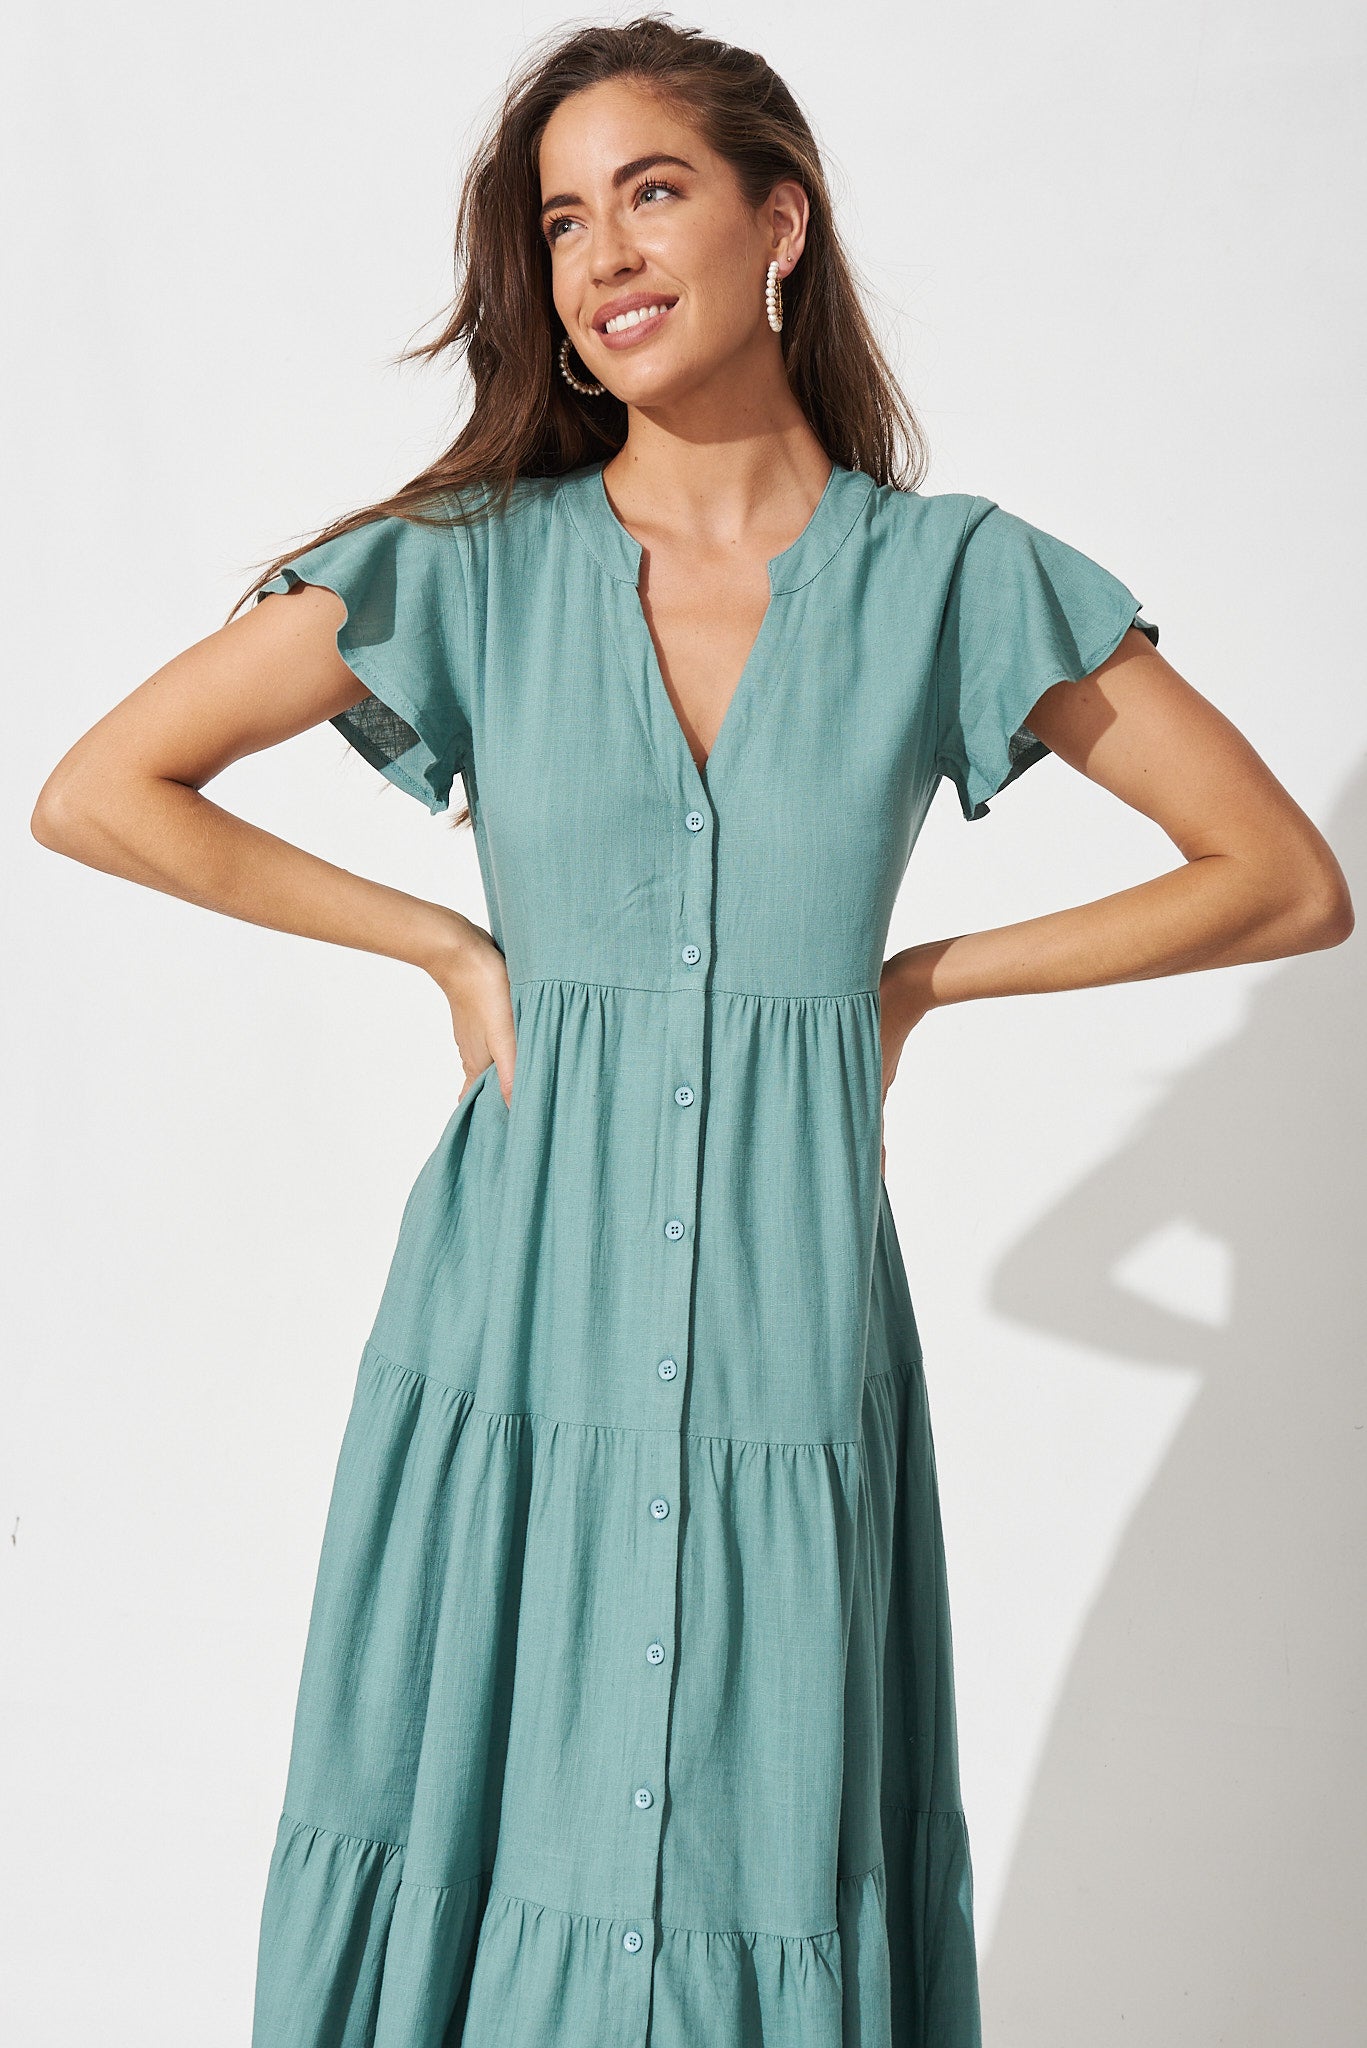 Marvela Midi Shirt Dress in Teal Linen Blend - Front